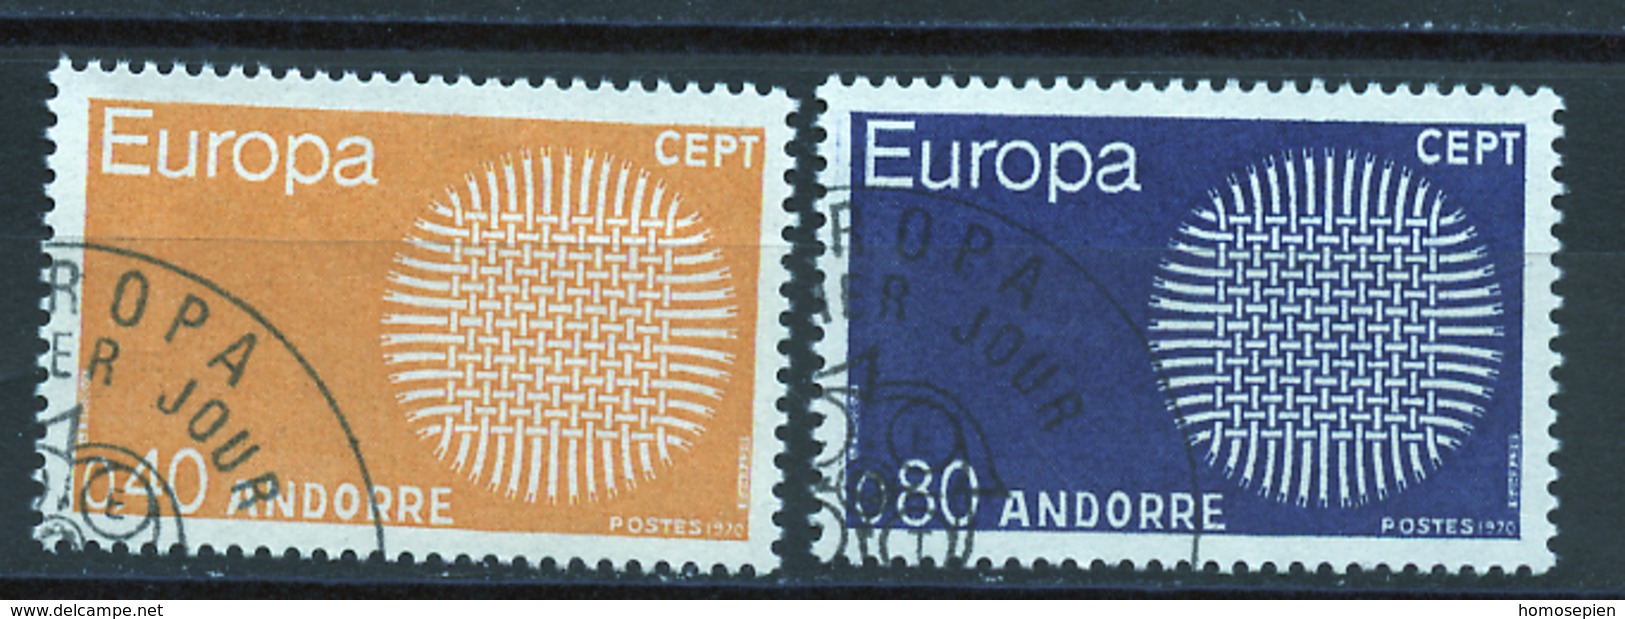 Andorre Français - Andorra 1970 Y&T N°202 à 203 - Michel N°222 à 223 (o) - EUROPA - Used Stamps